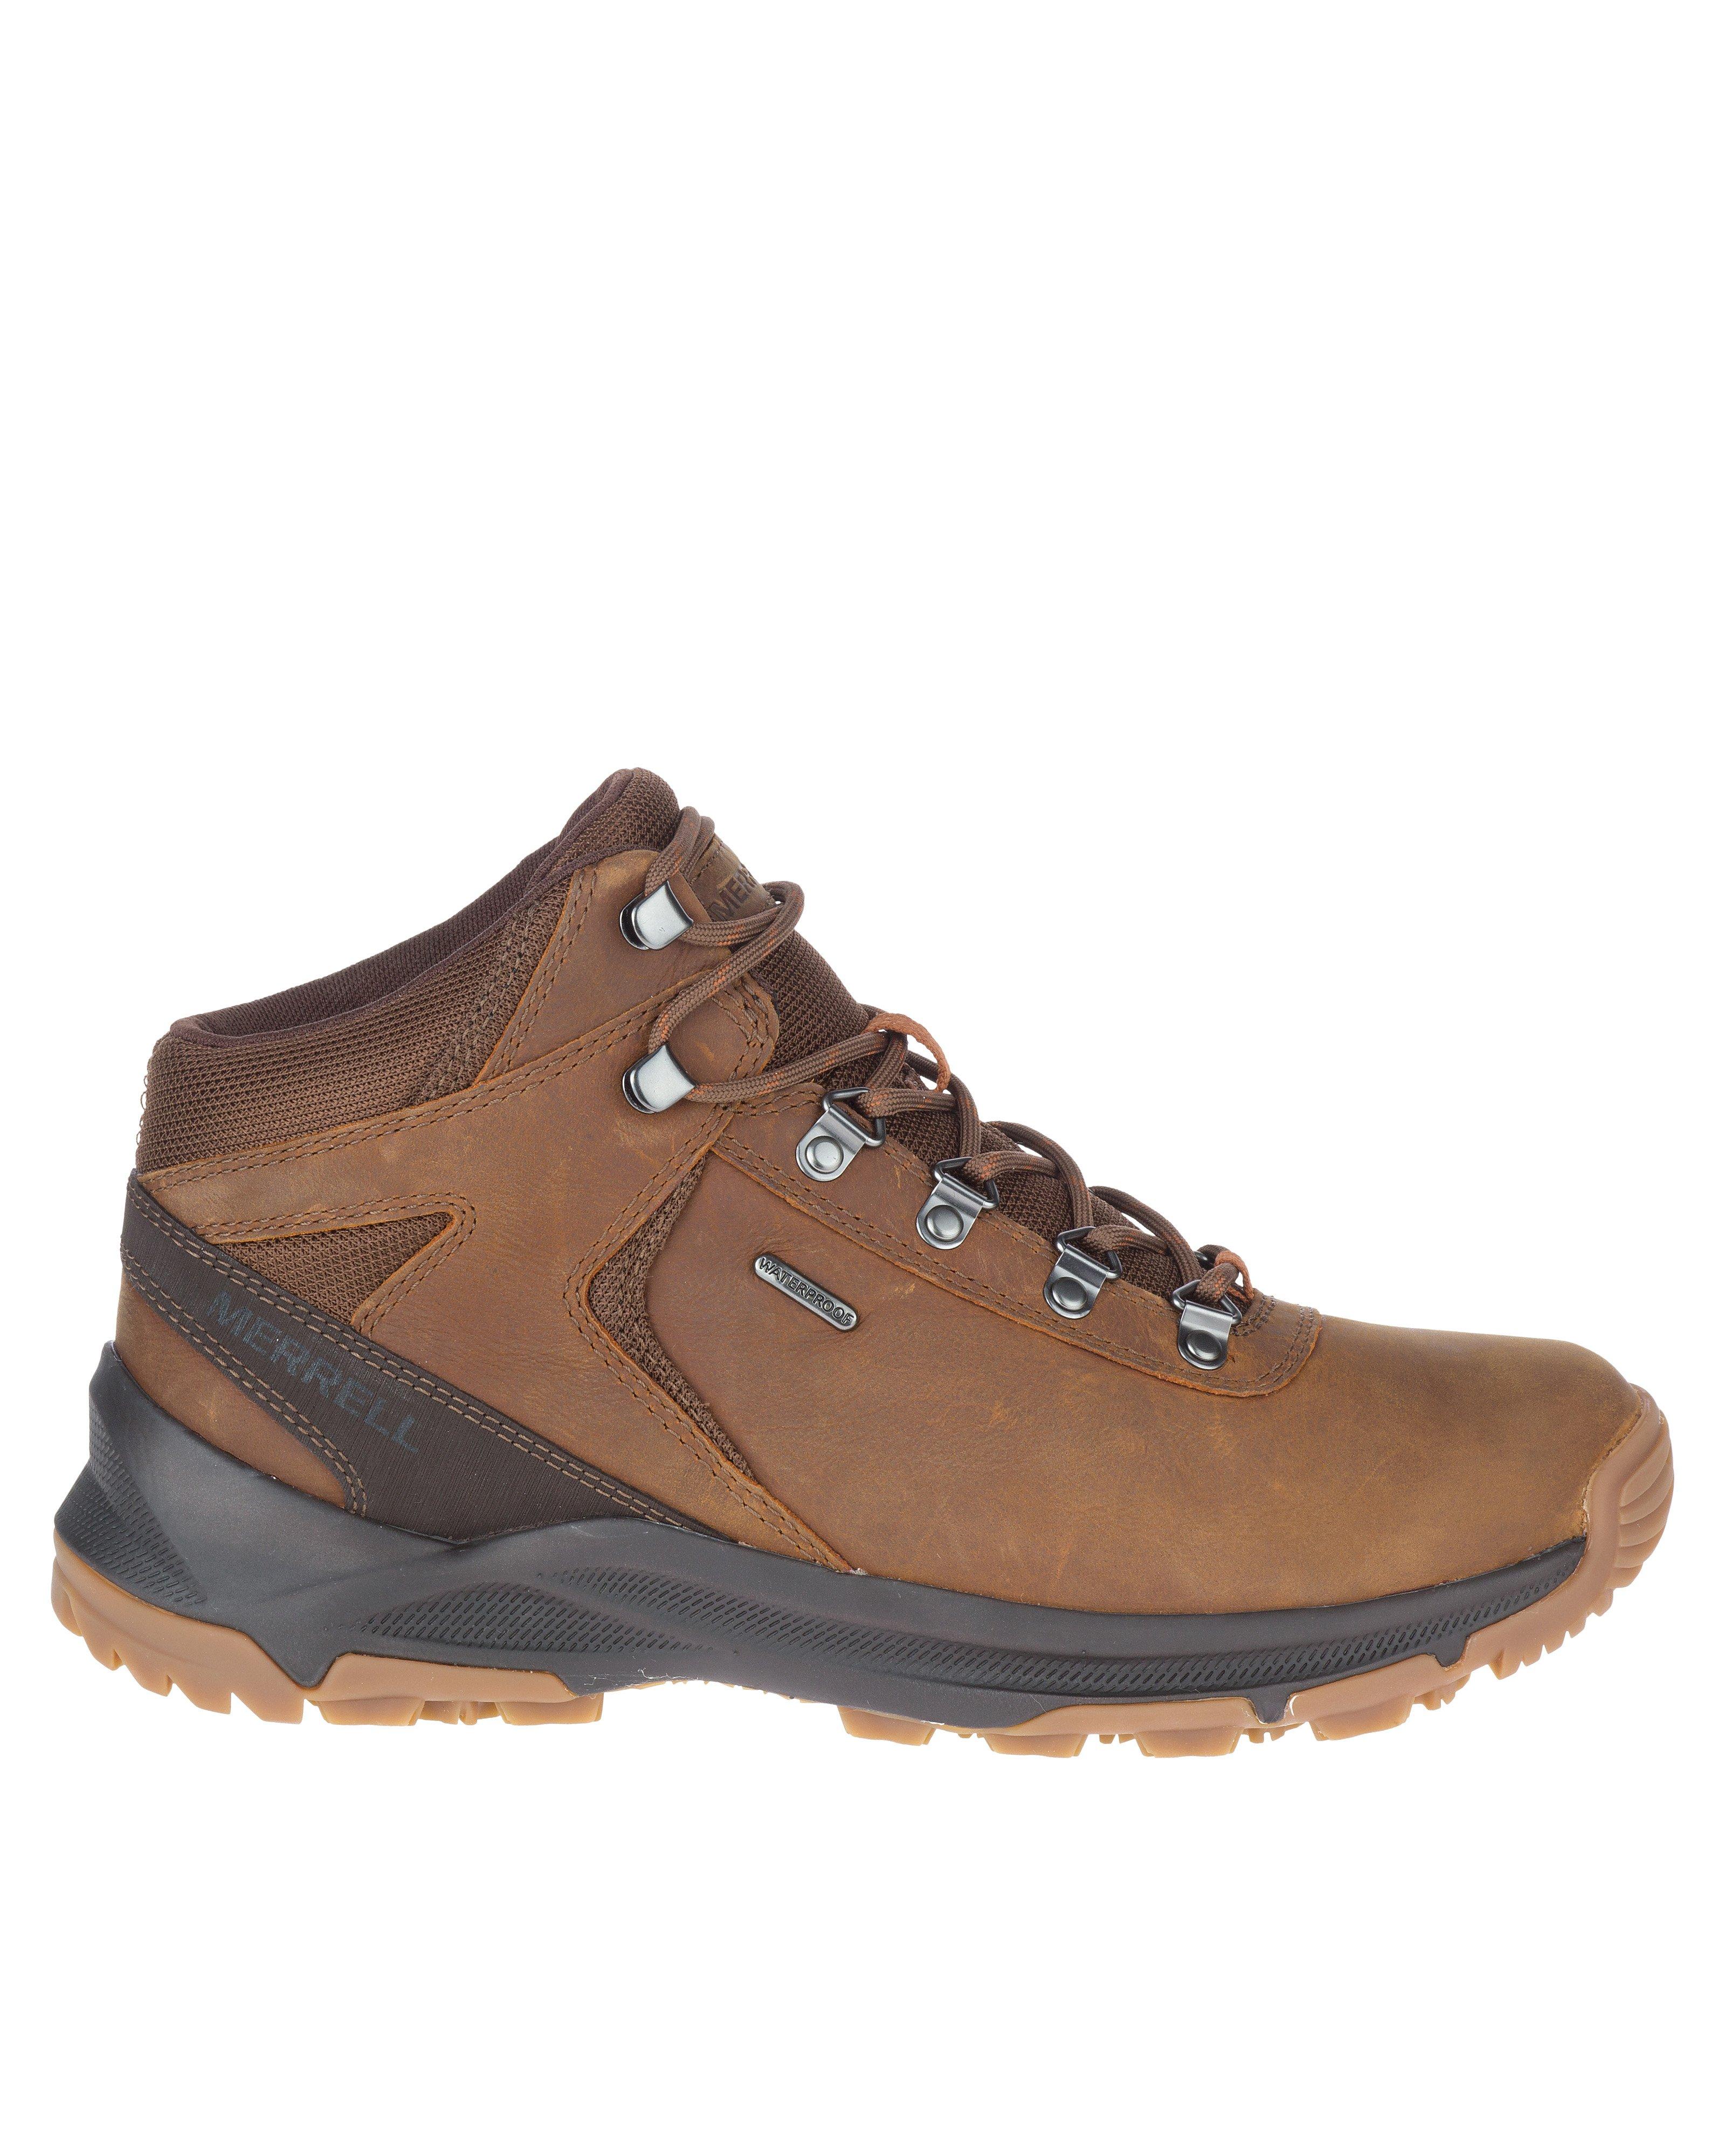 Merrell Men's Erie Waterproof Hiking Boots | Cape Union Mart